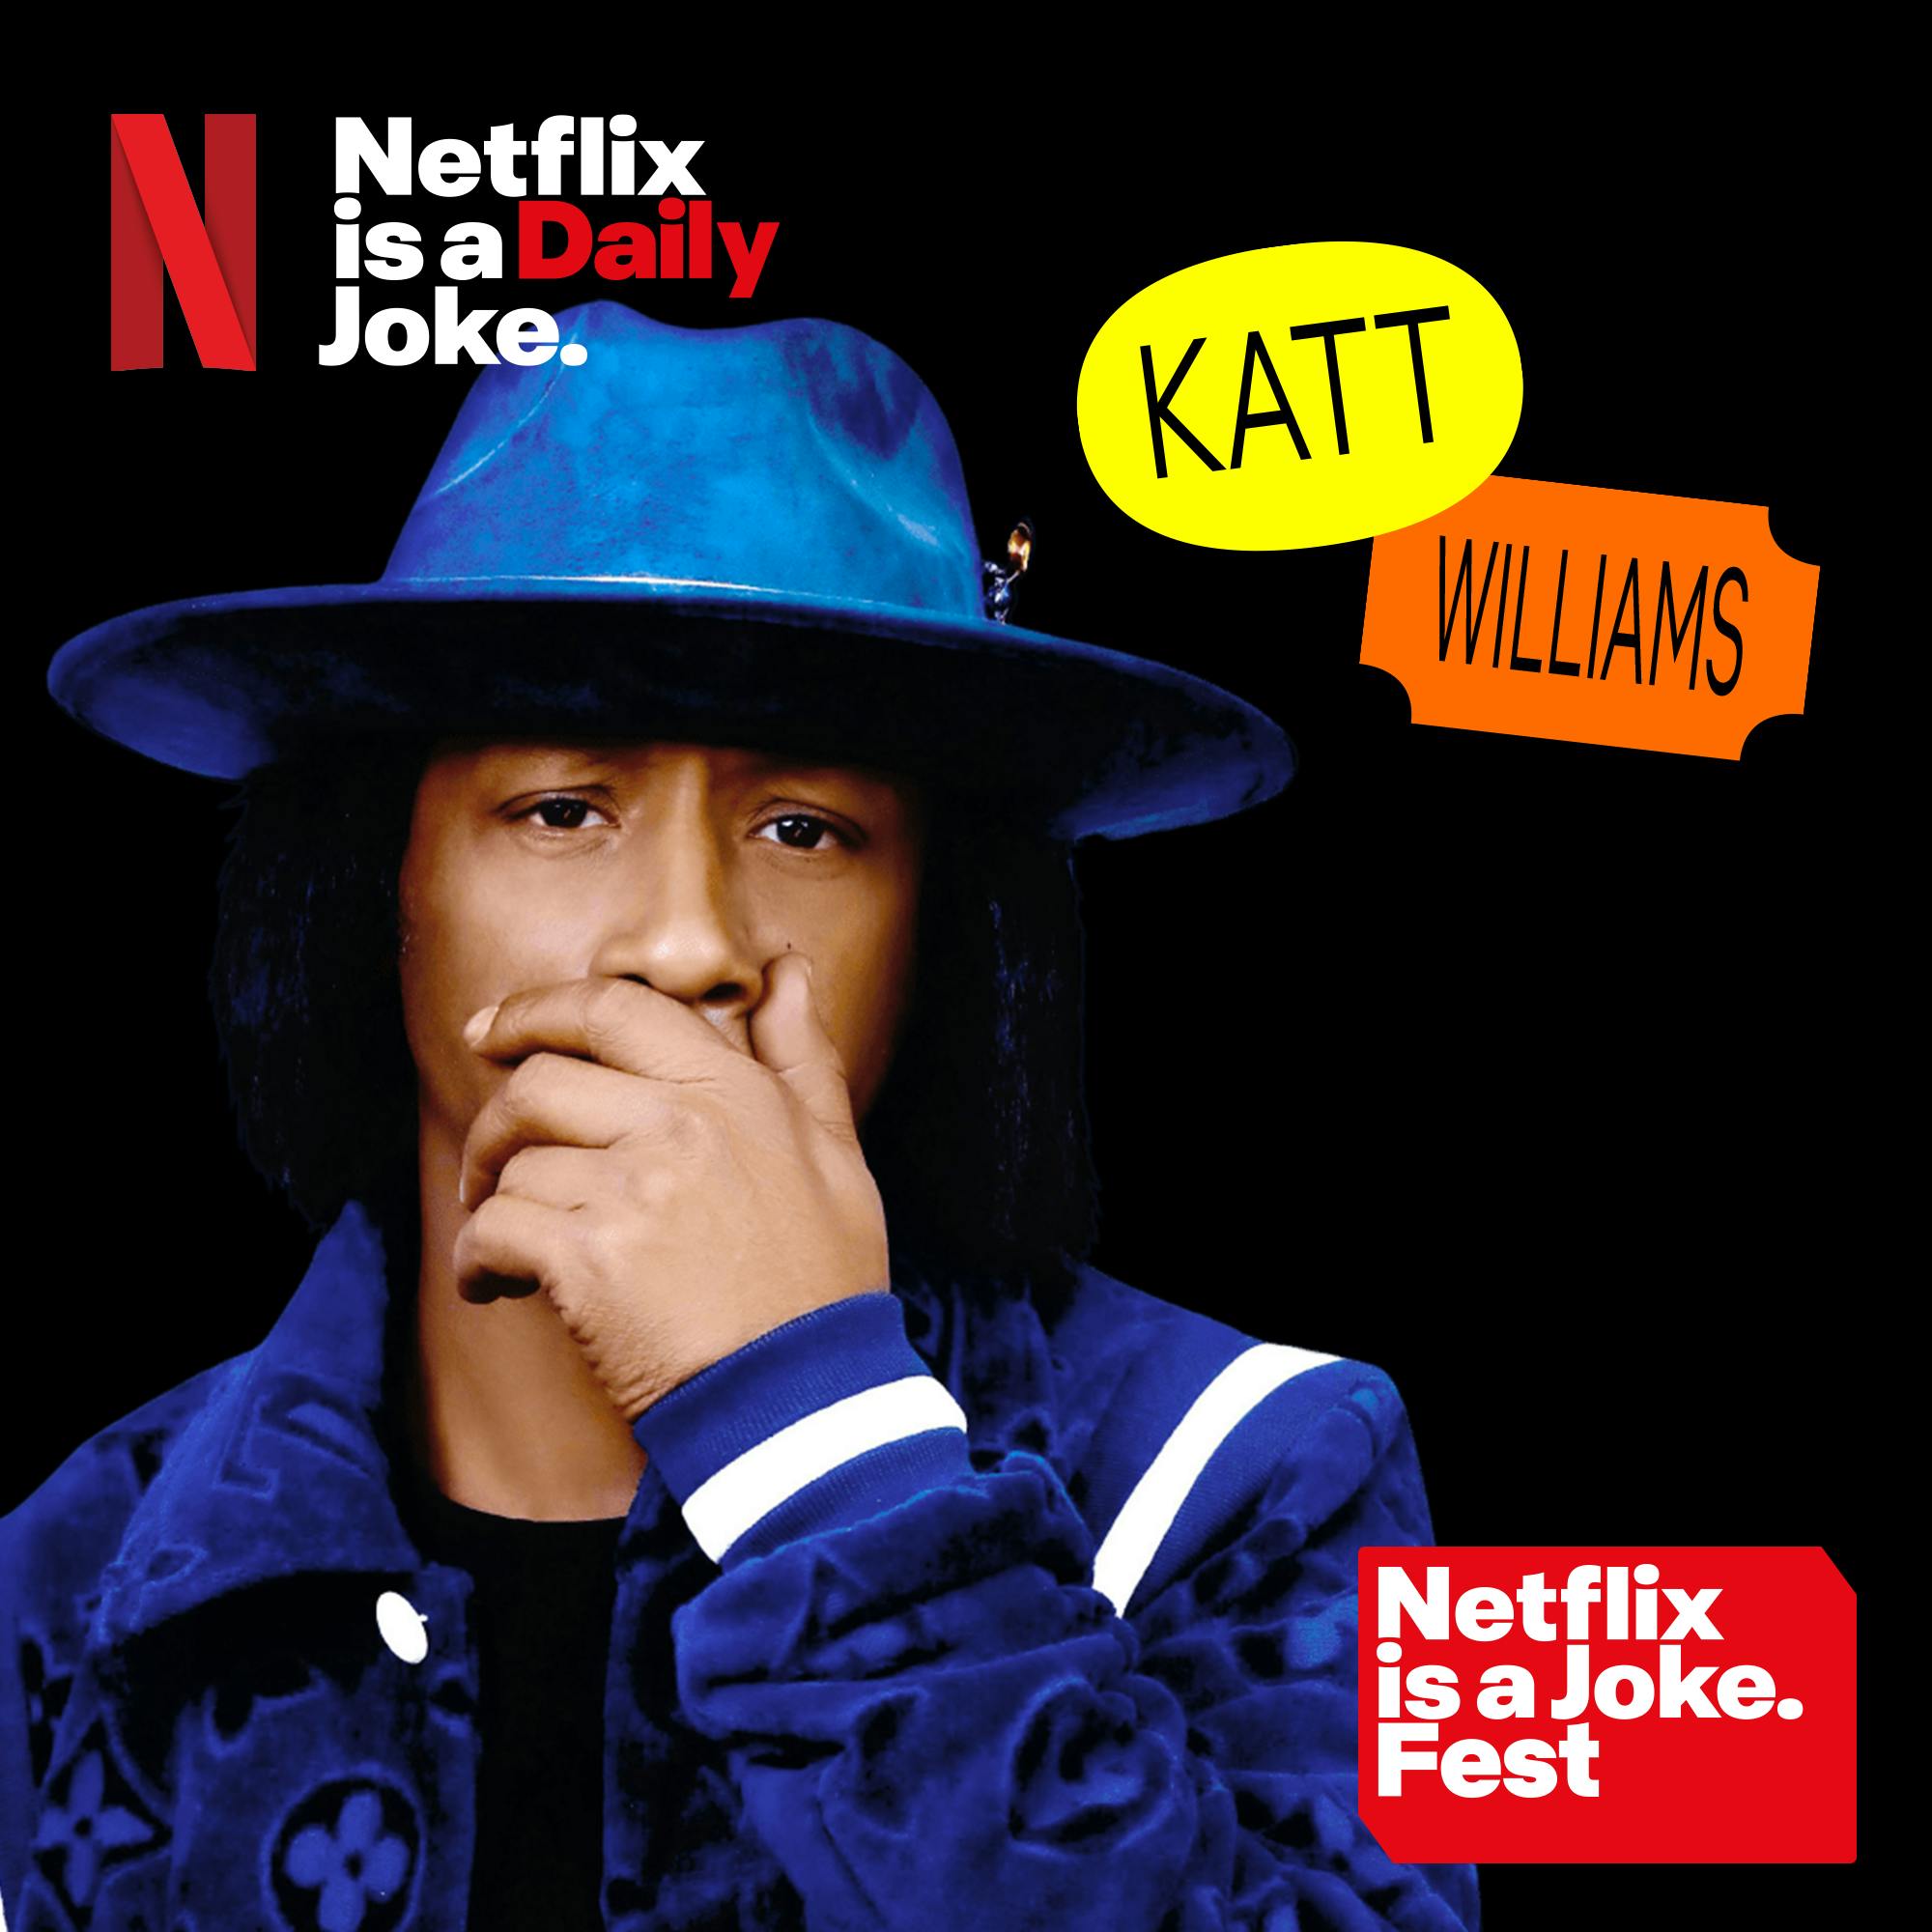 Katt Williams: A Joke About Crazy News